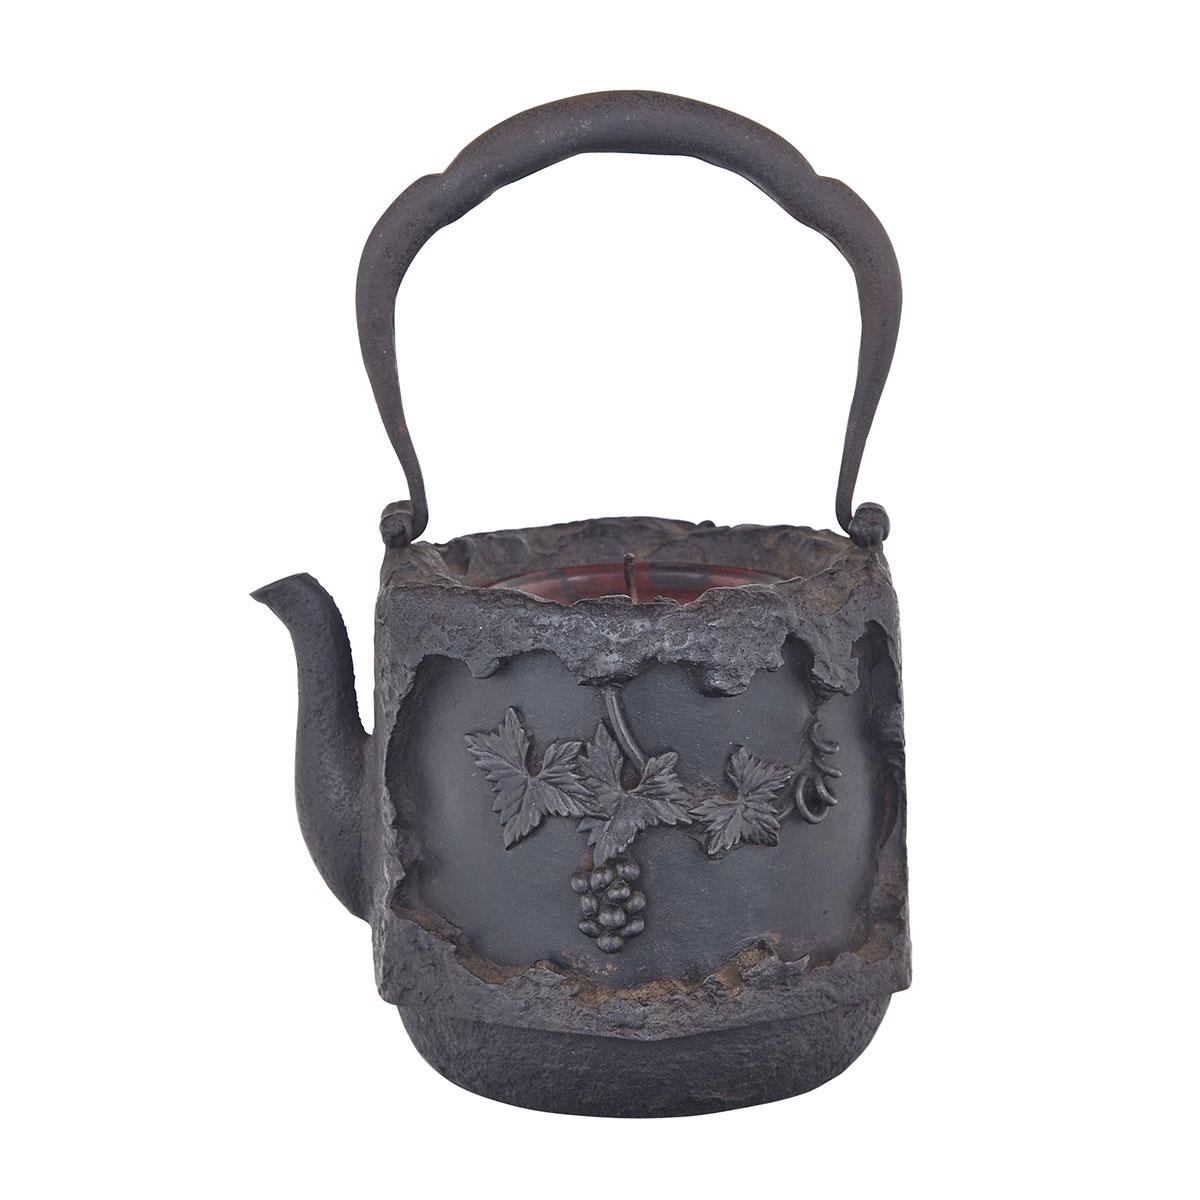 Cast Iron ‘Grape and Squirrel’ Teapot, 19th Century